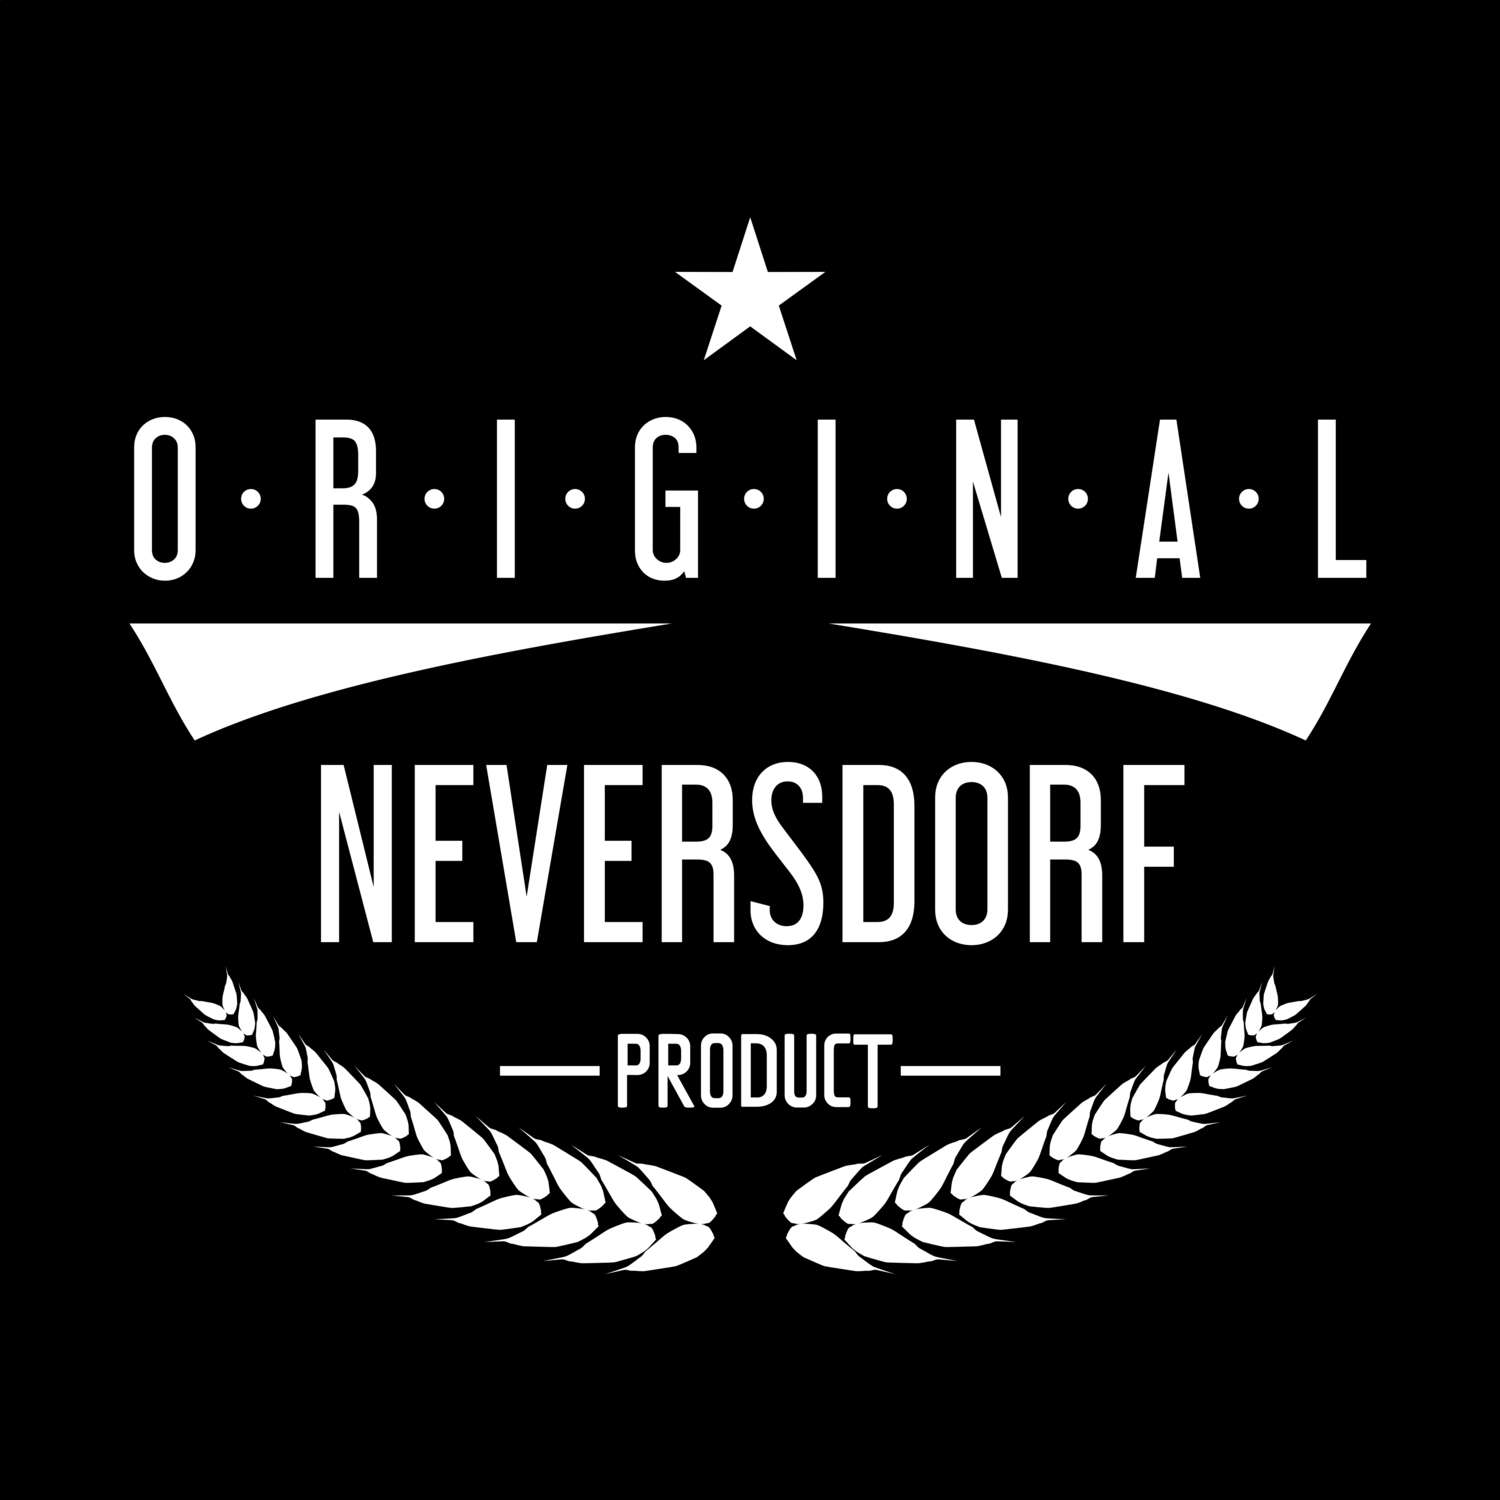 Neversdorf T-Shirt »Original Product«